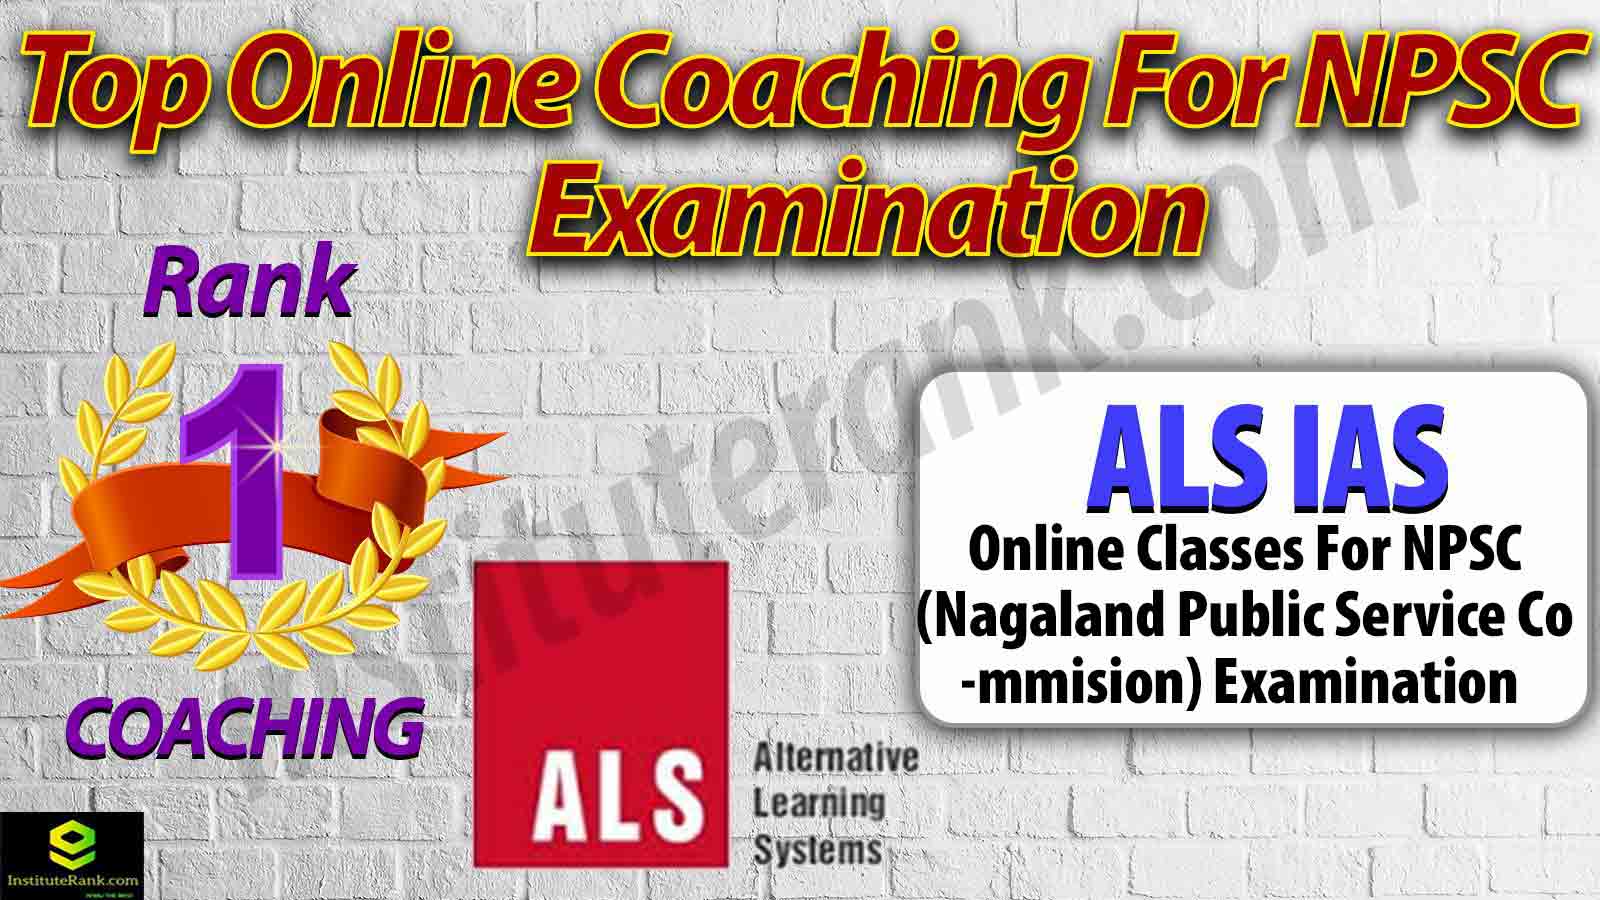 Best Online Coaching for NPSC Examination